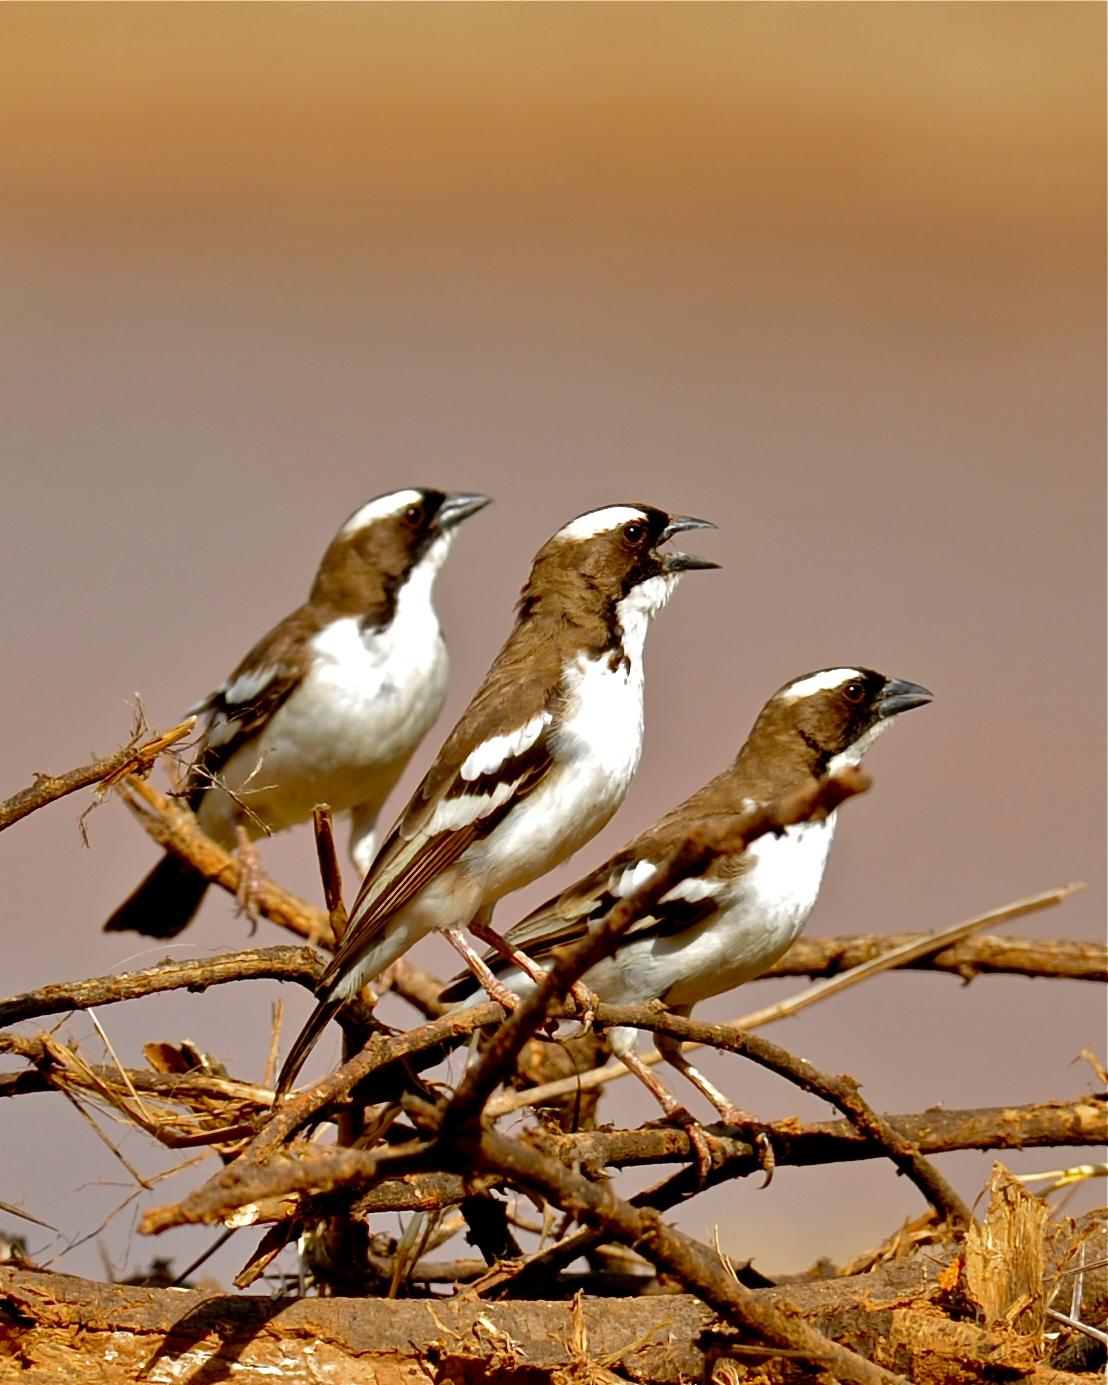 White-browed Sparrow-Weaver Photo by Gerald Friesen